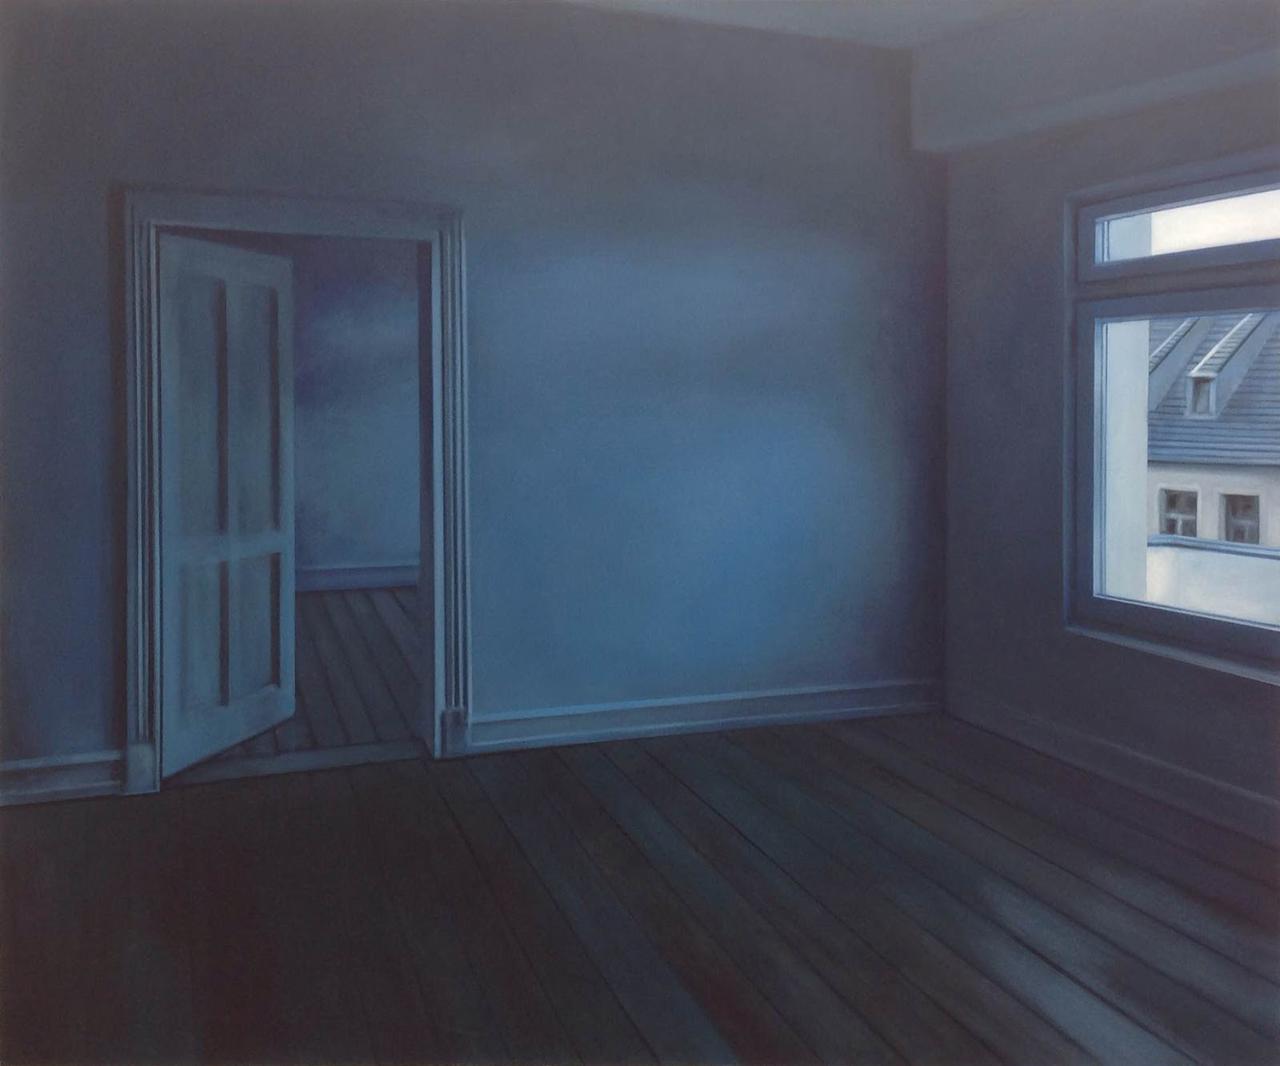 The apartment, oil on canvas, 150 x 180 cm, 2016